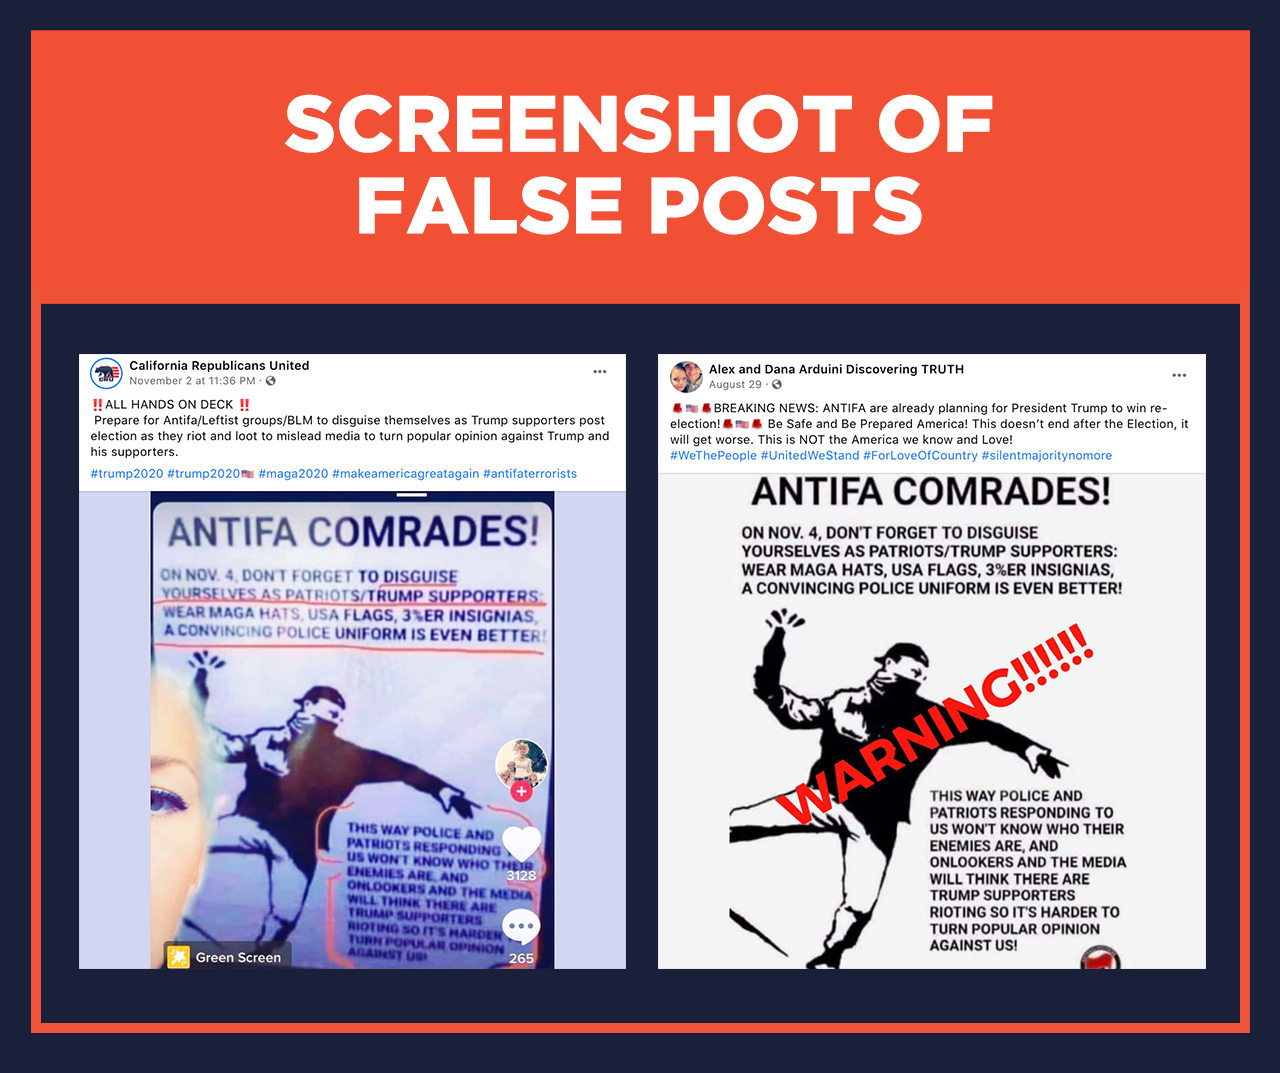 FALSE POSTS Antifa flyer urges patriot disguise for riots after US Election 2020